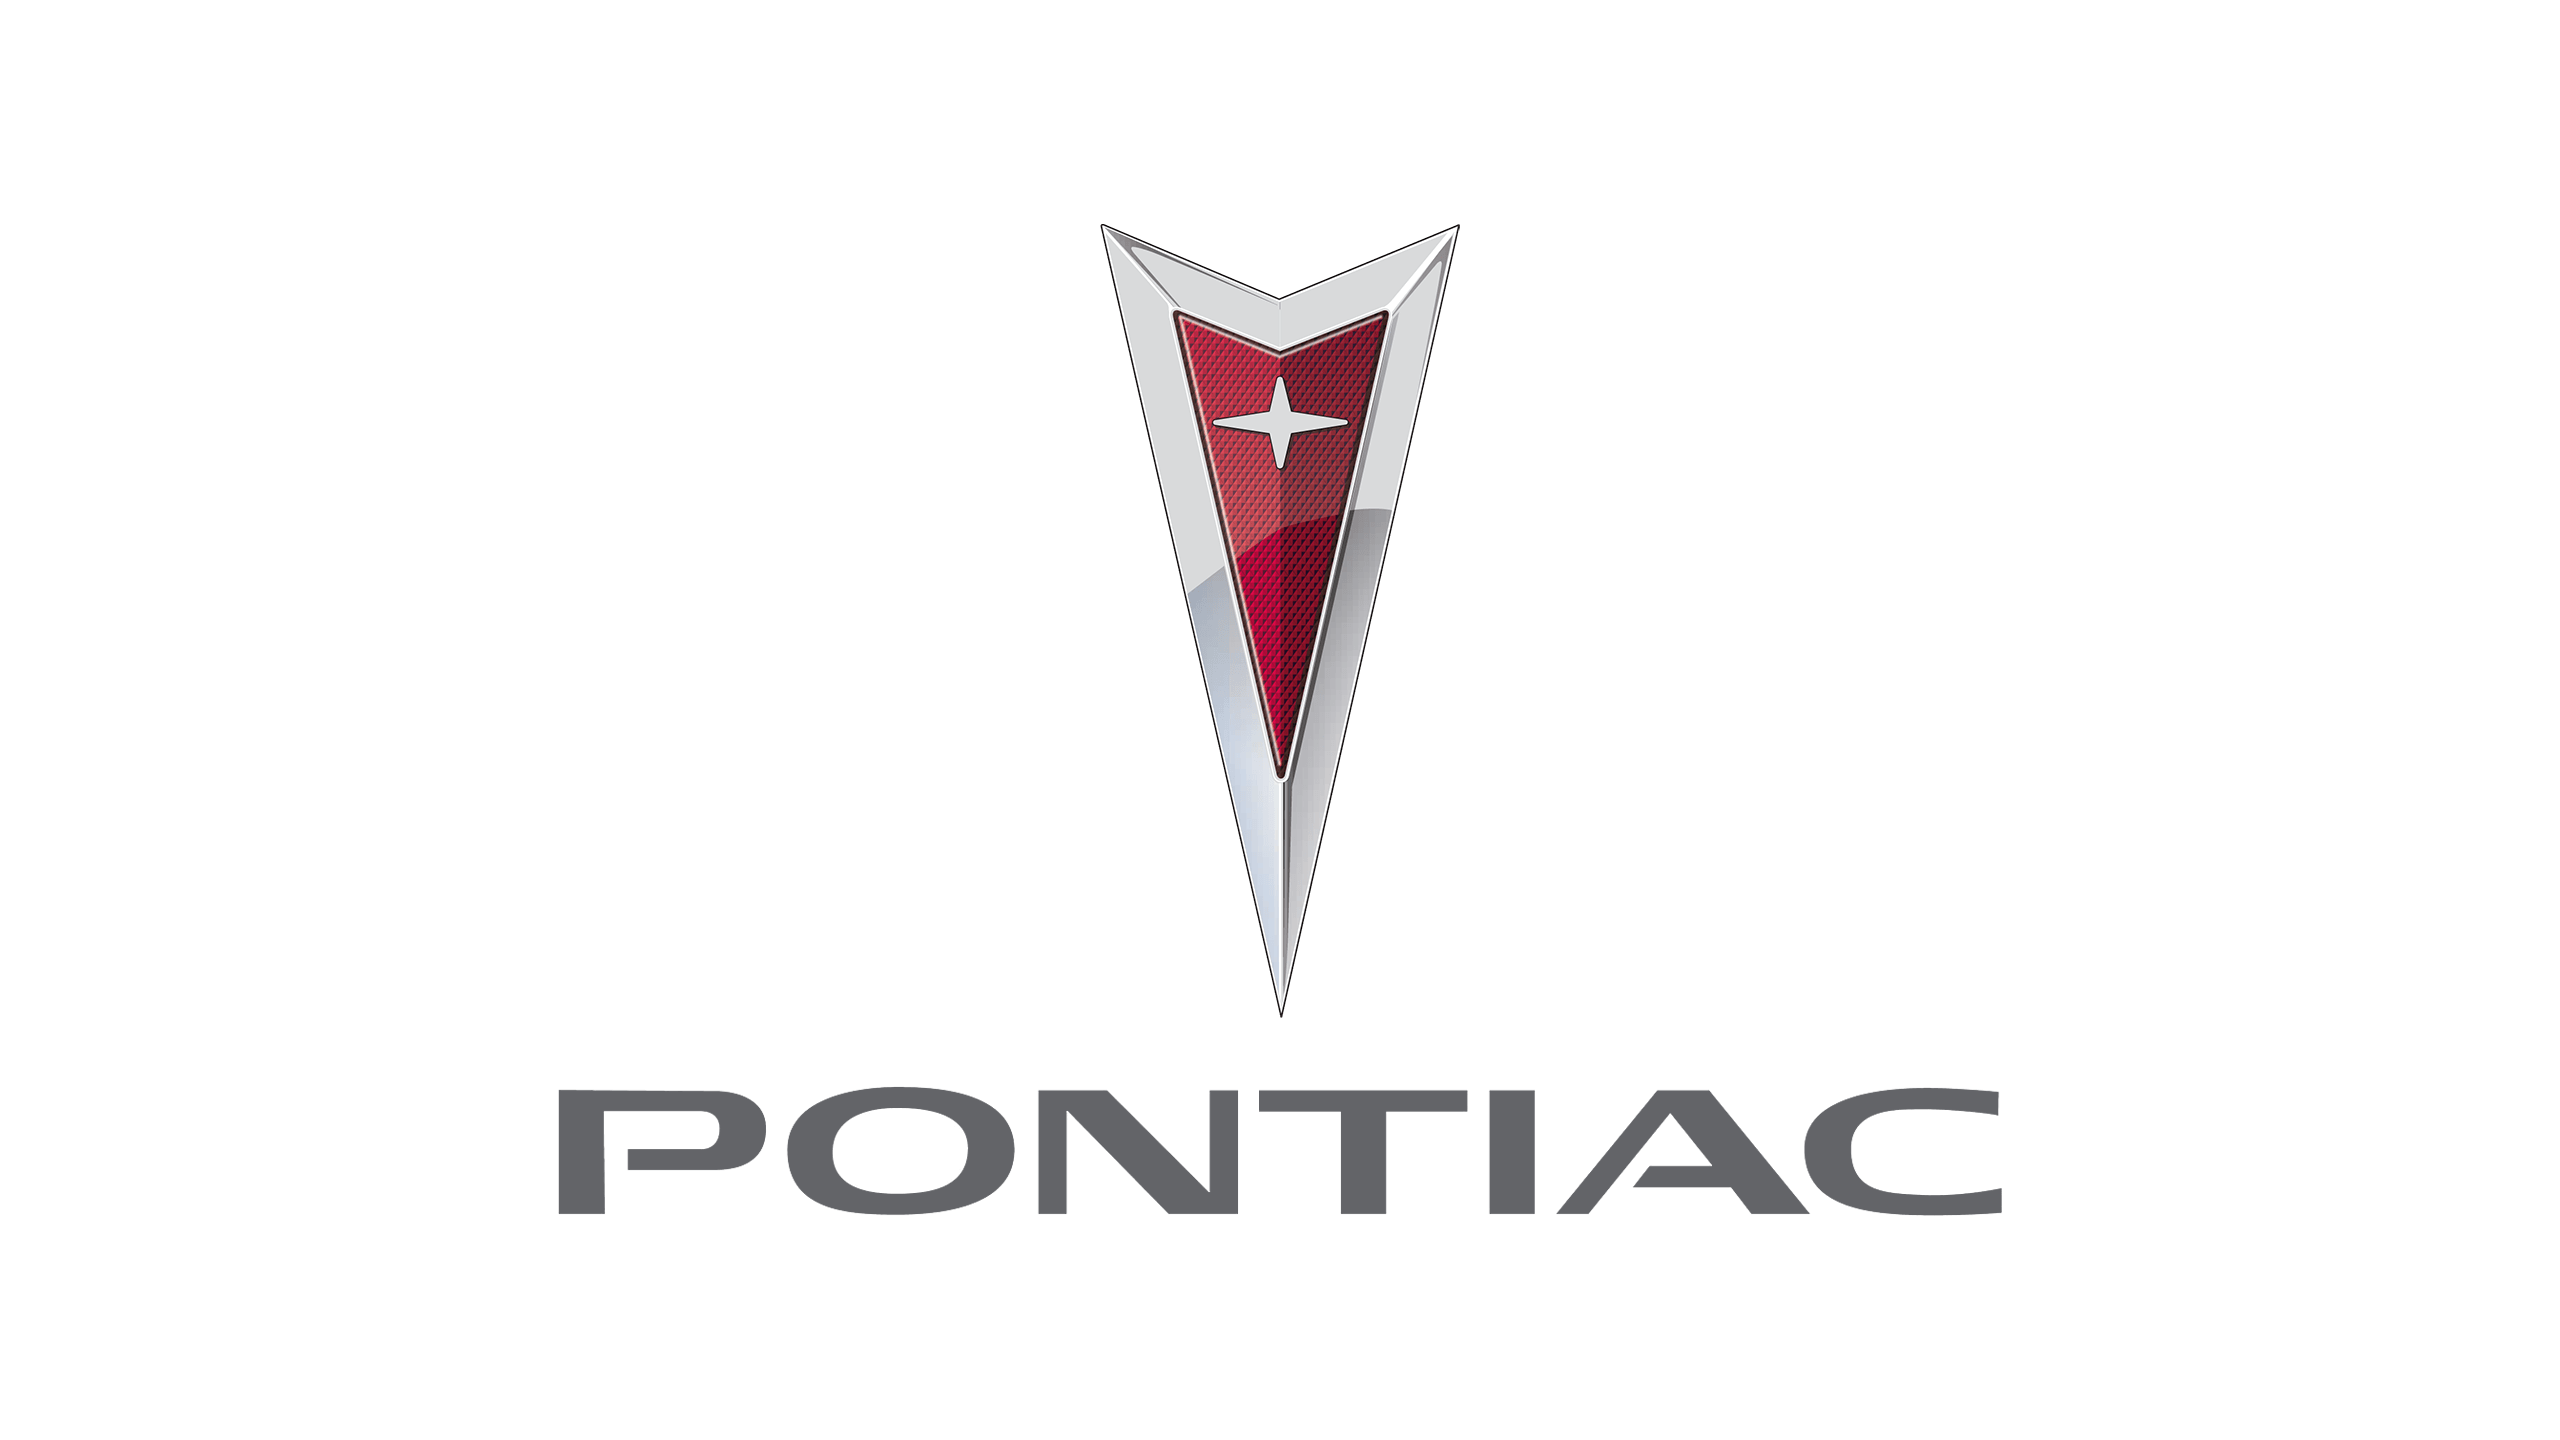 Pontiac Logo - Pontiac Logo, HD Png, Information | Carlogos.org